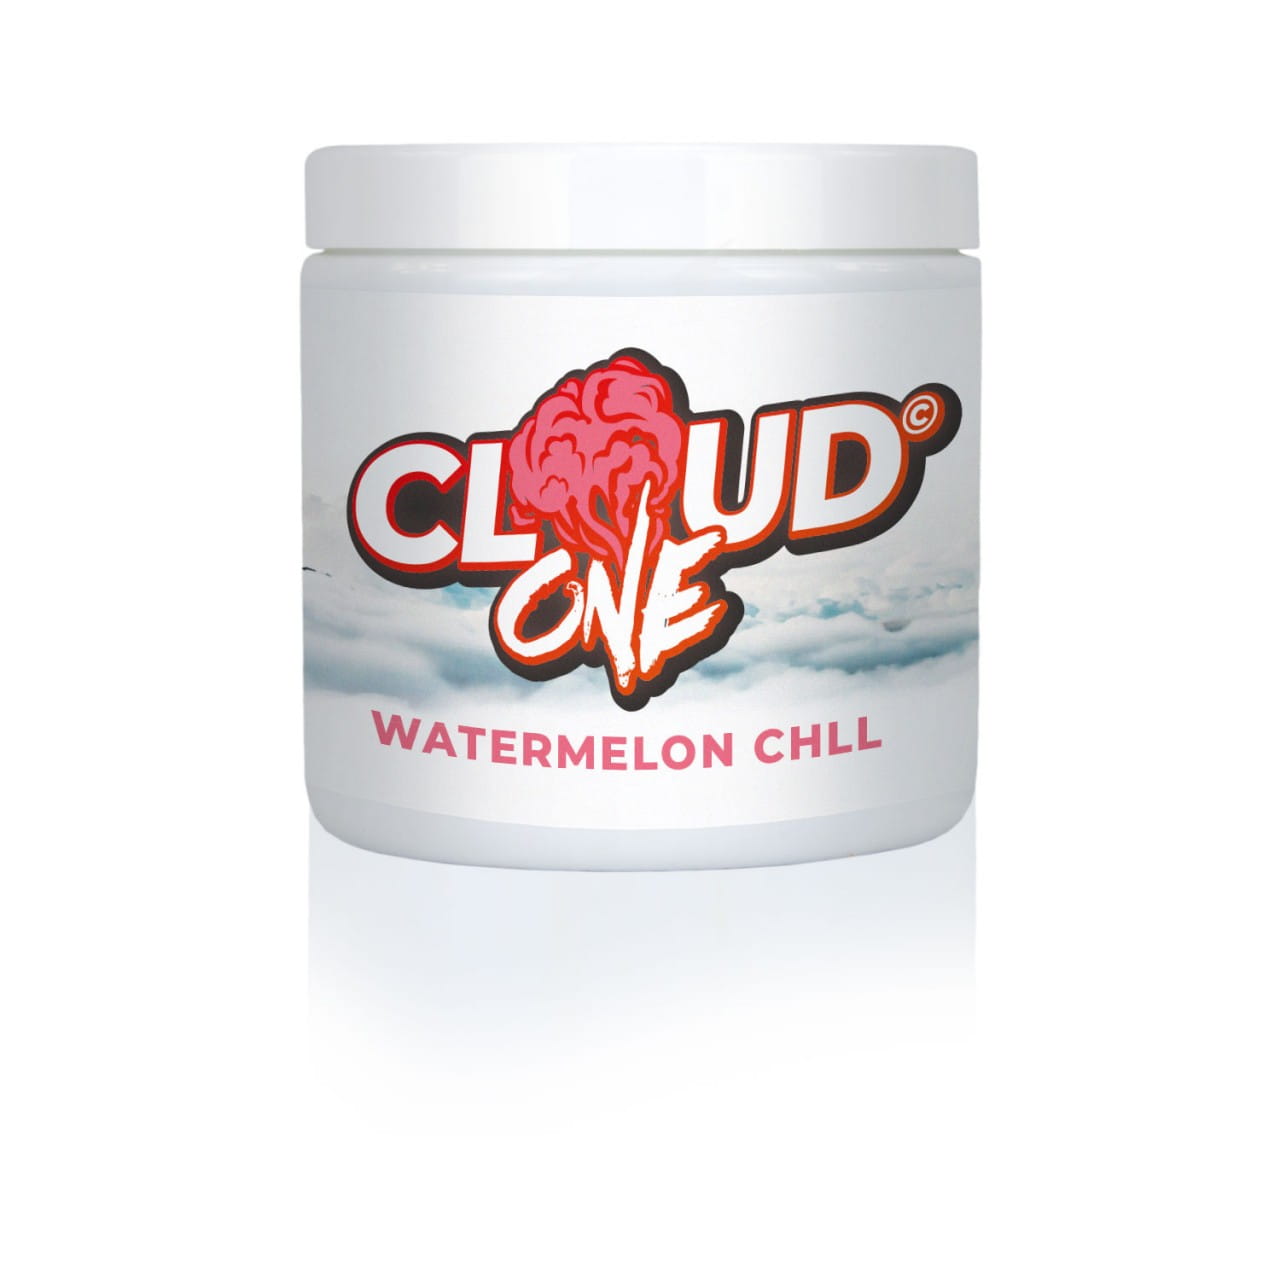 Cloud One - Watermelon Chll 200 g unter ohne Angabe